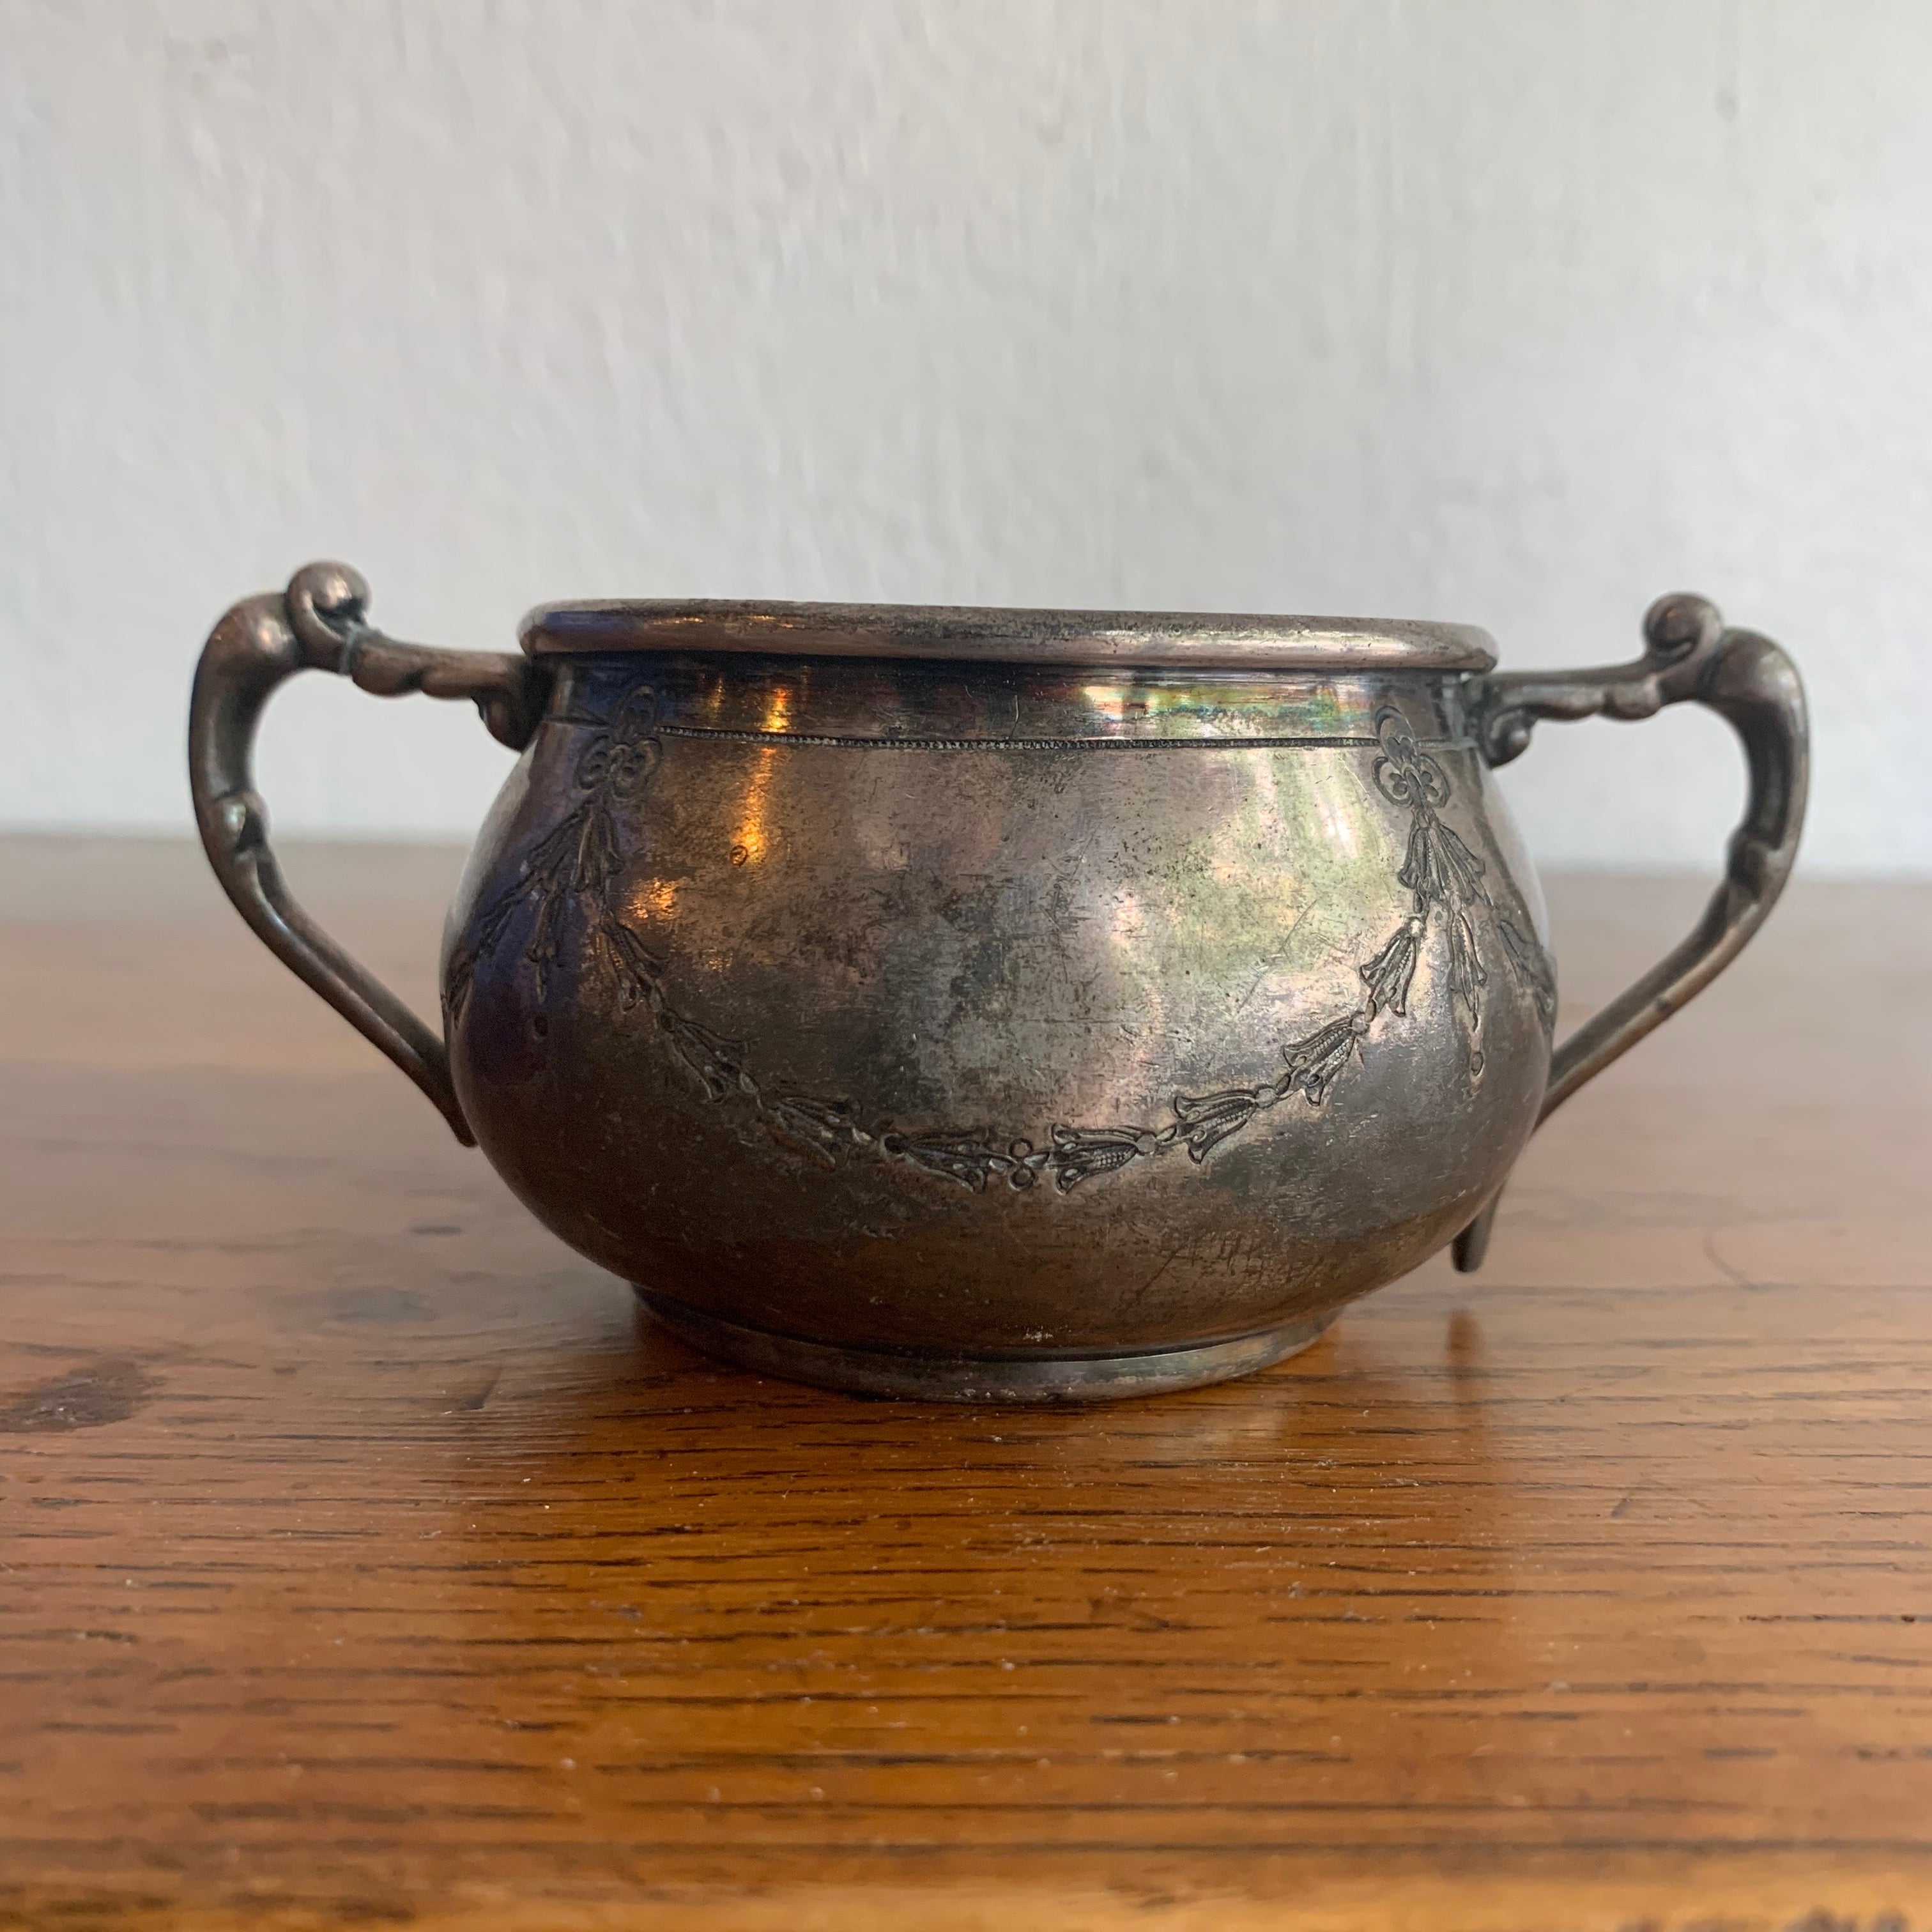 Vintage Find, Silver Metal Sugar Bowl